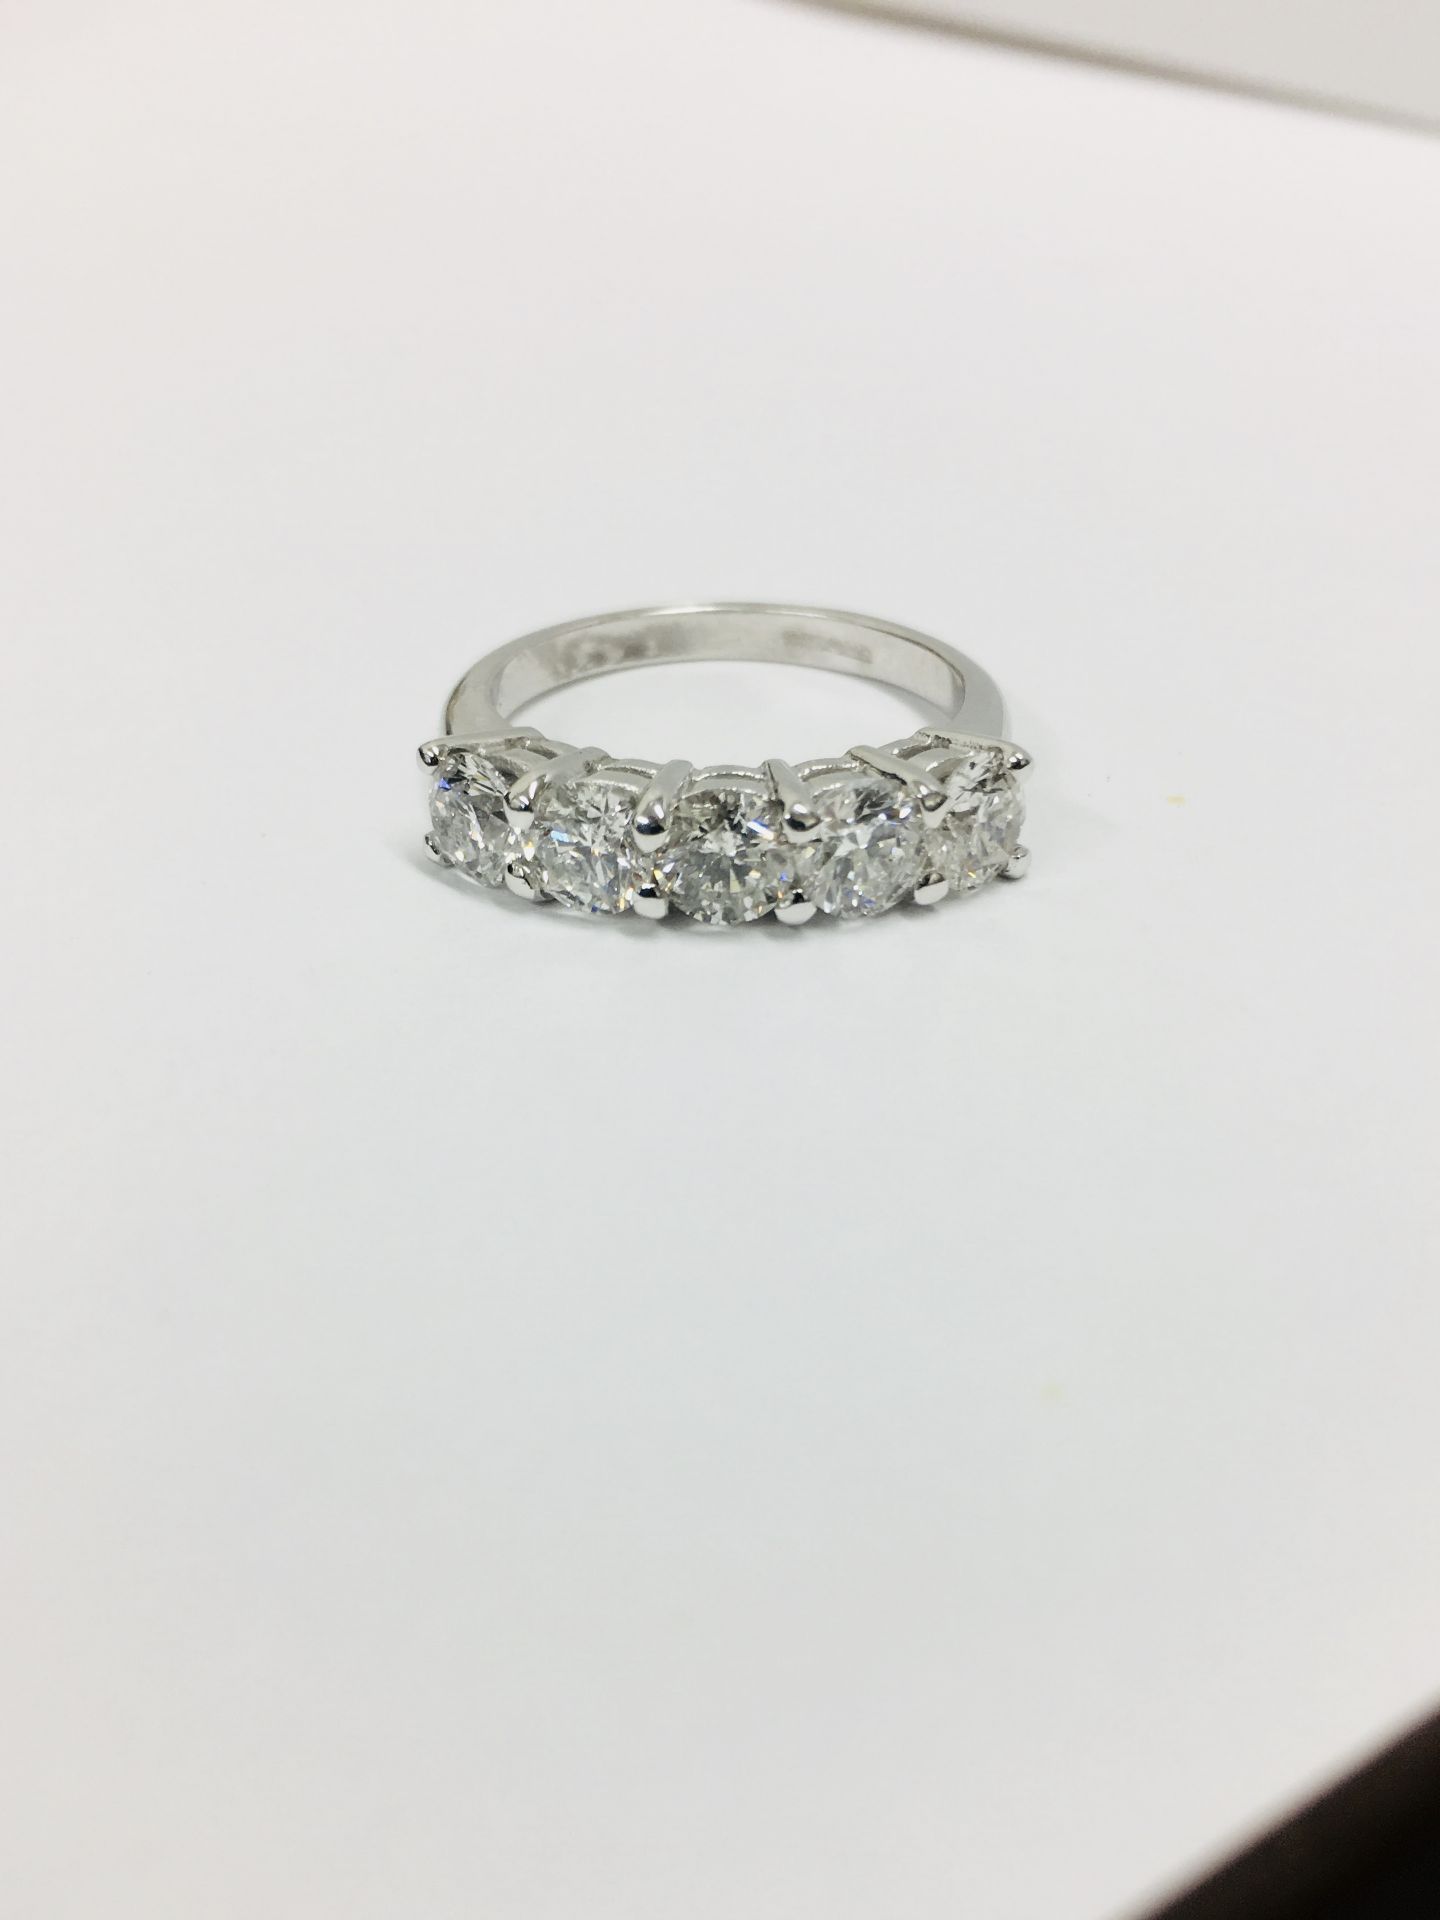 2Ct Brilliant Cut Five Stone Diamond Ring - Image 2 of 6